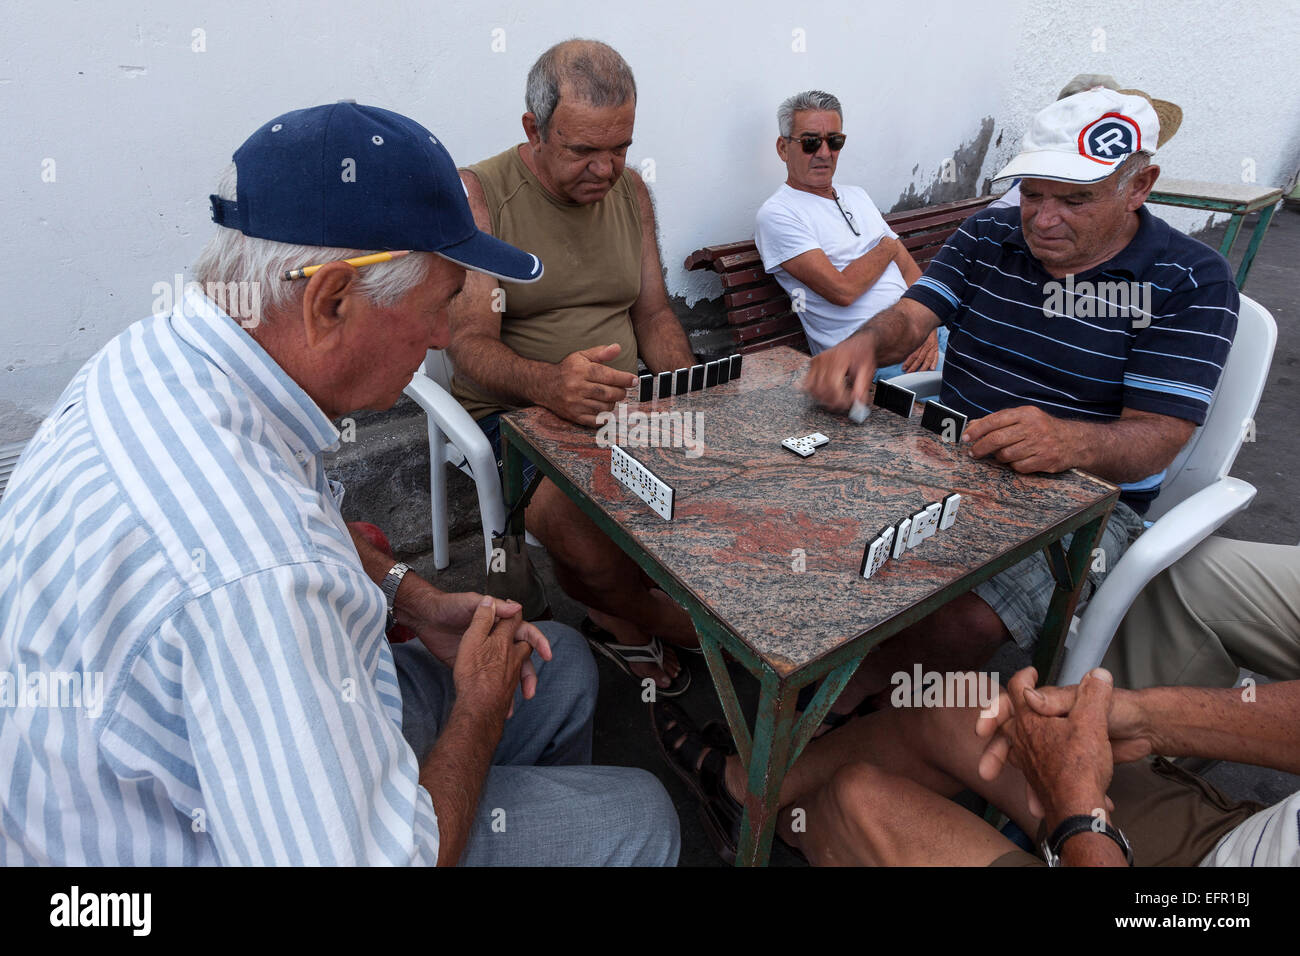 Les hommes jouant aux dominos, Vueltas, Valle Gran Rey, La Gomera, Canary Islands, Spain Banque D'Images